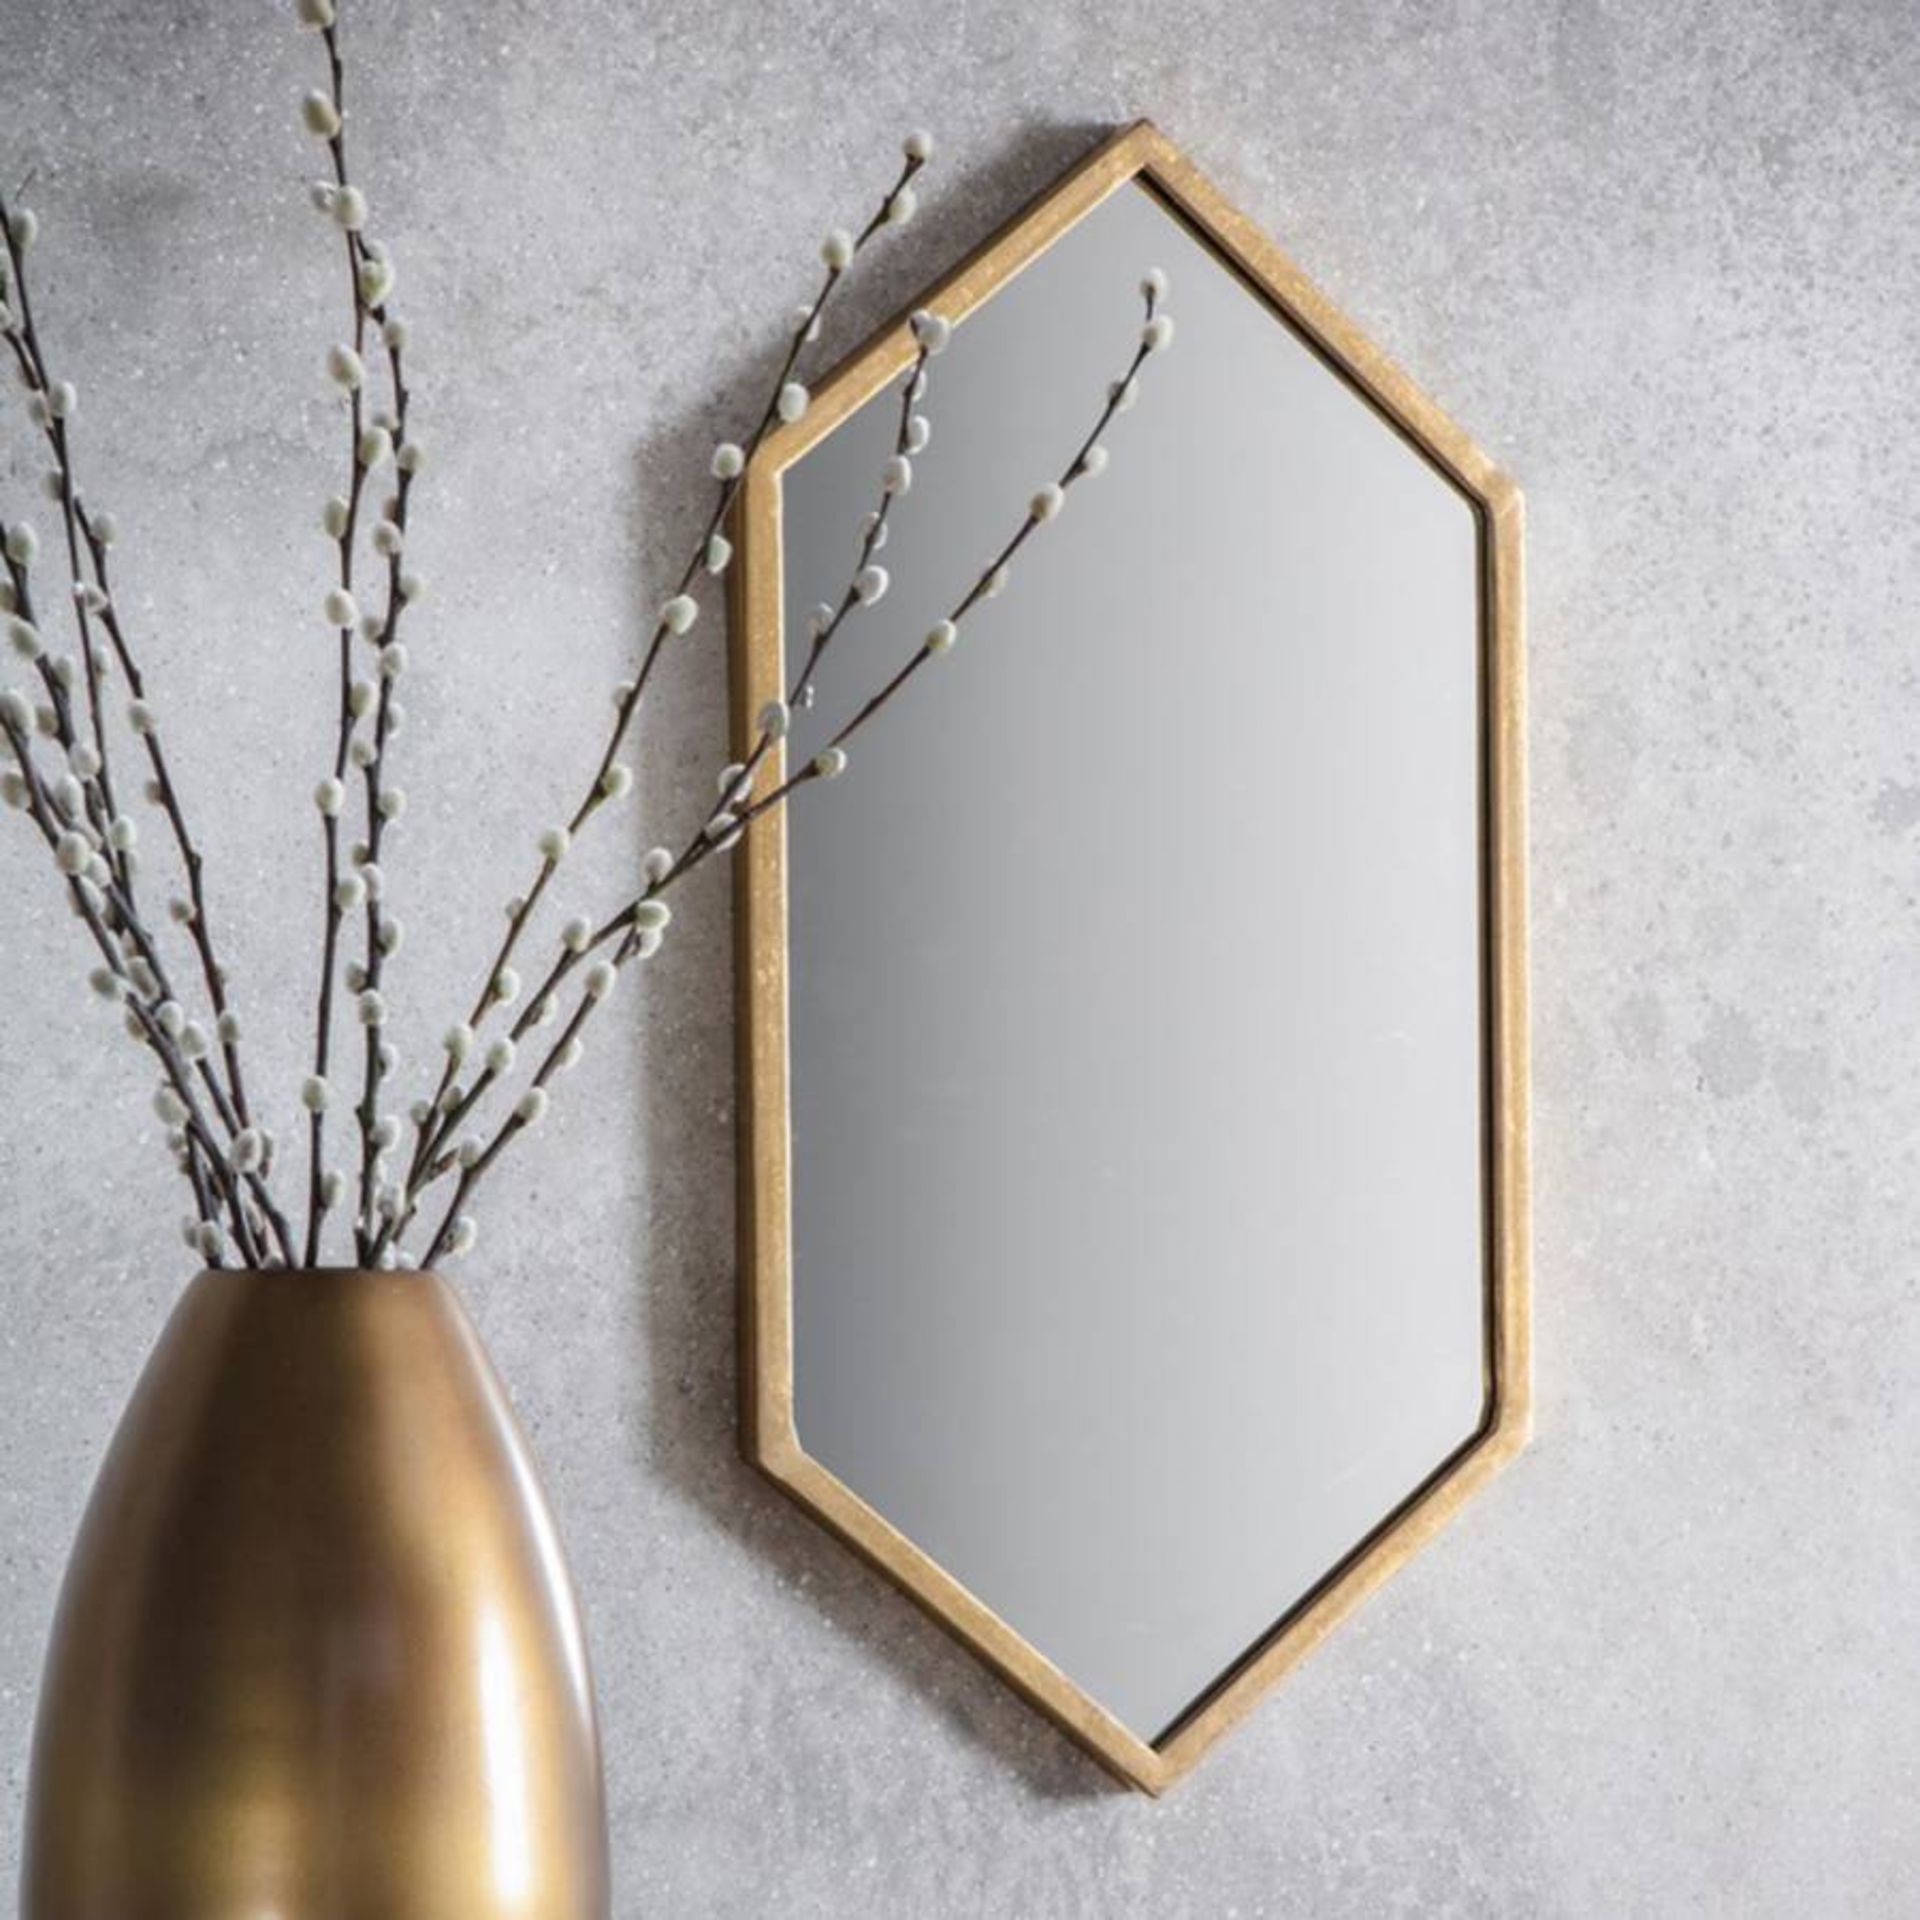 Helston Antique Gold Wall Mirror Featuring a stunning hexagonal-shaped mirror design complimented